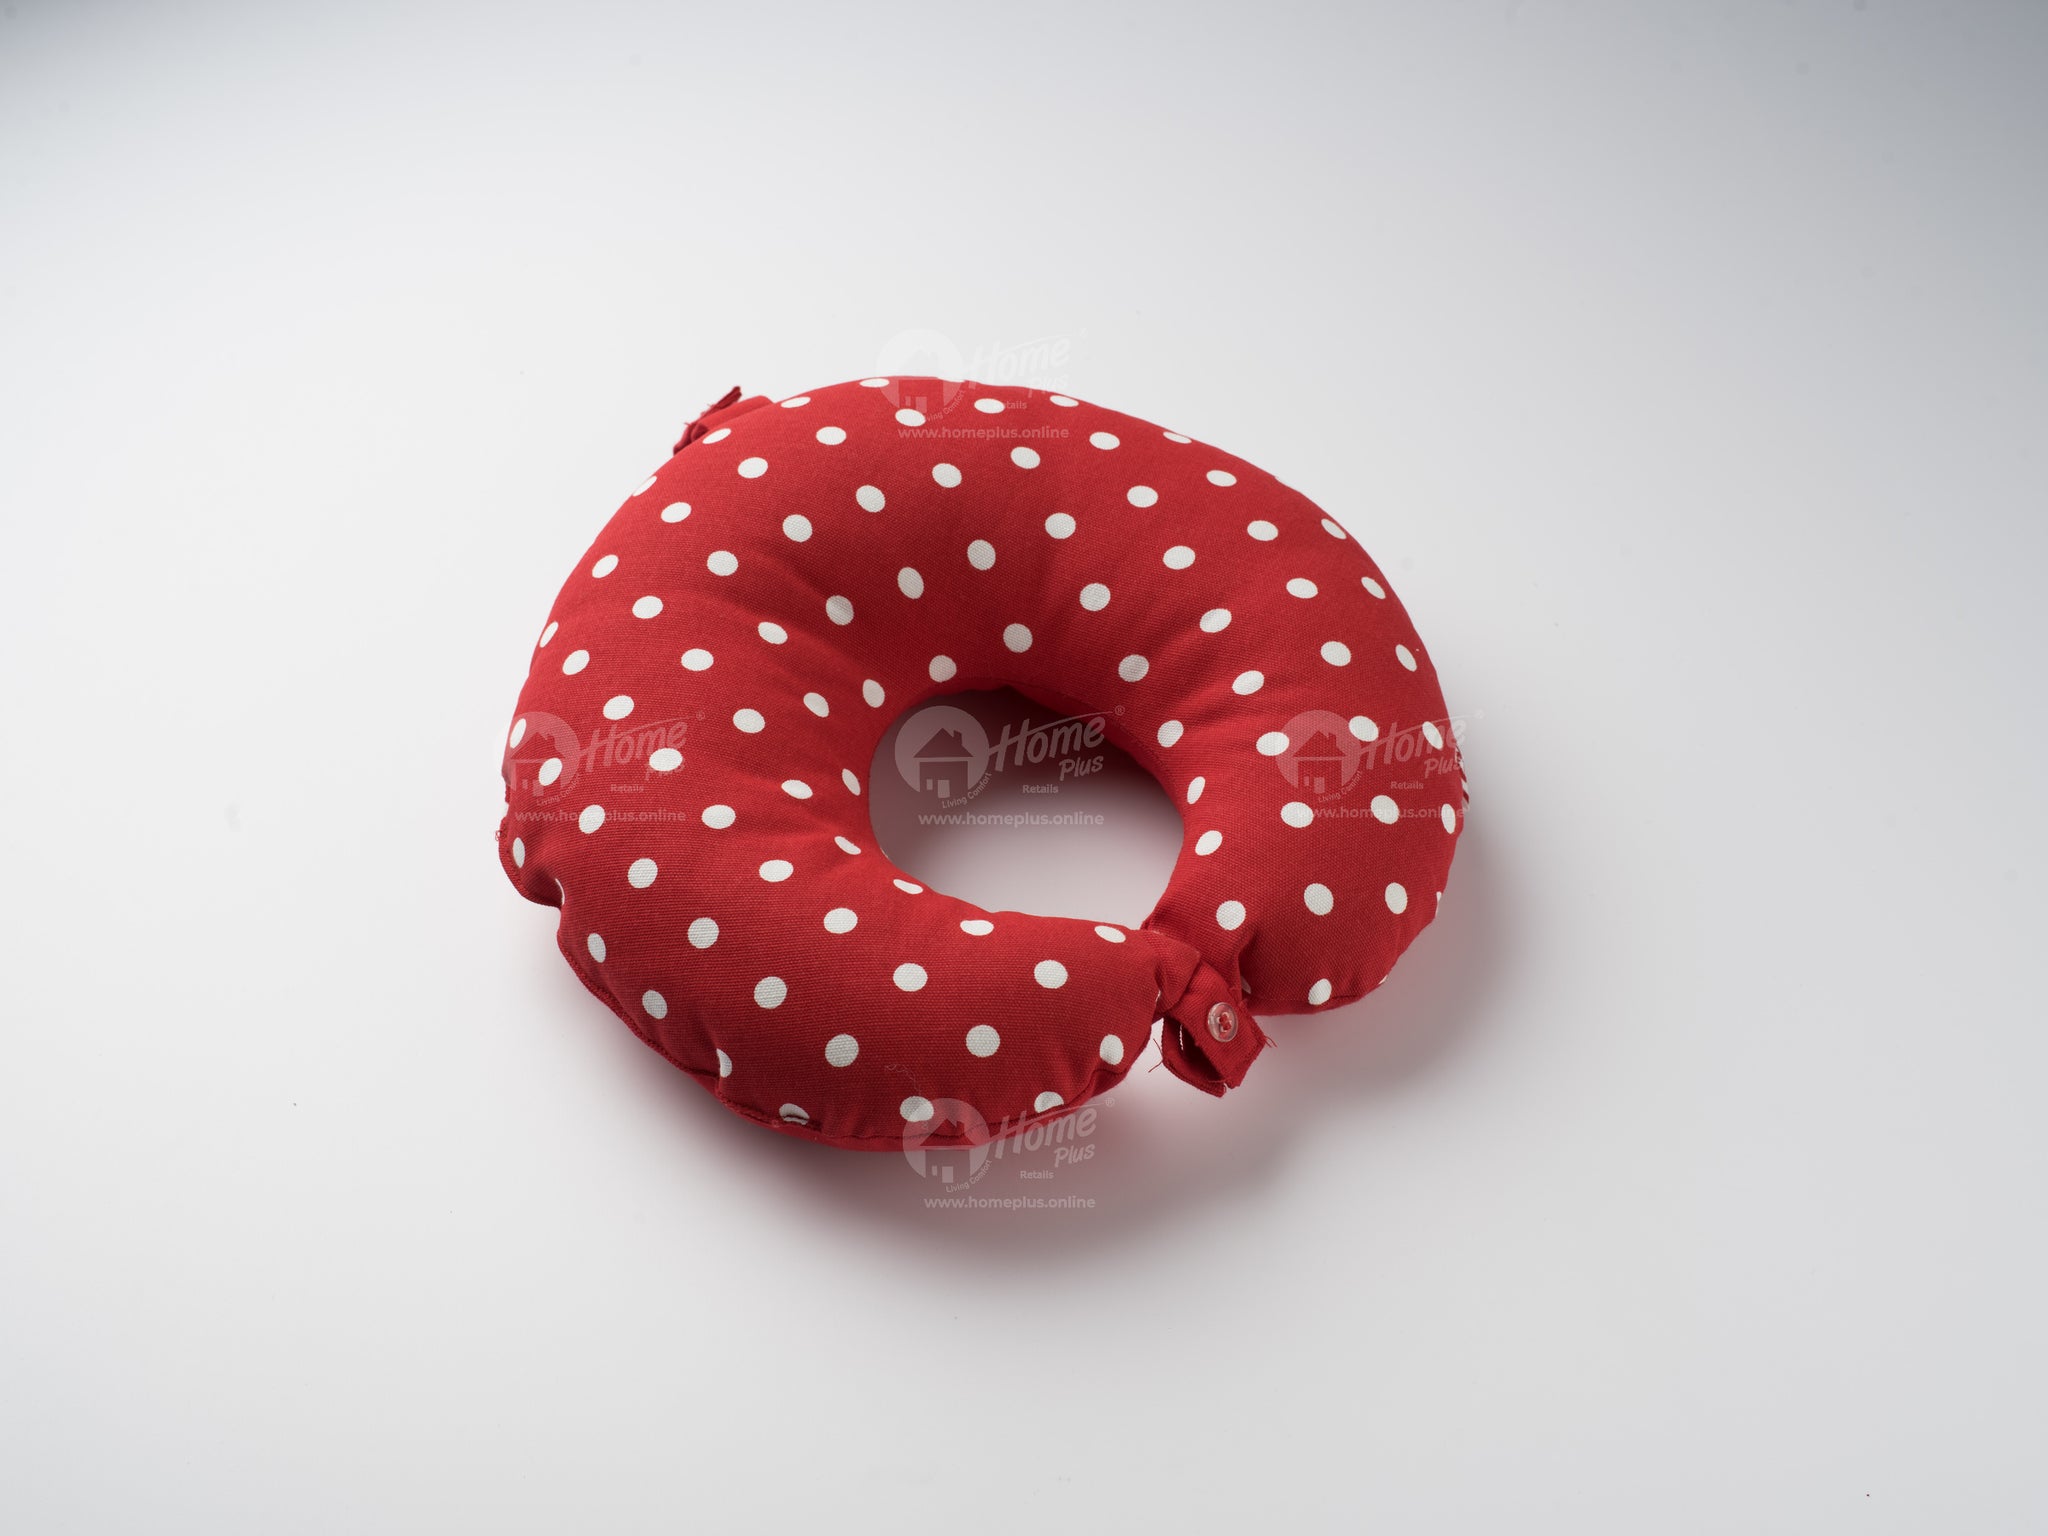 Neck Pillow - Polka Dot Red